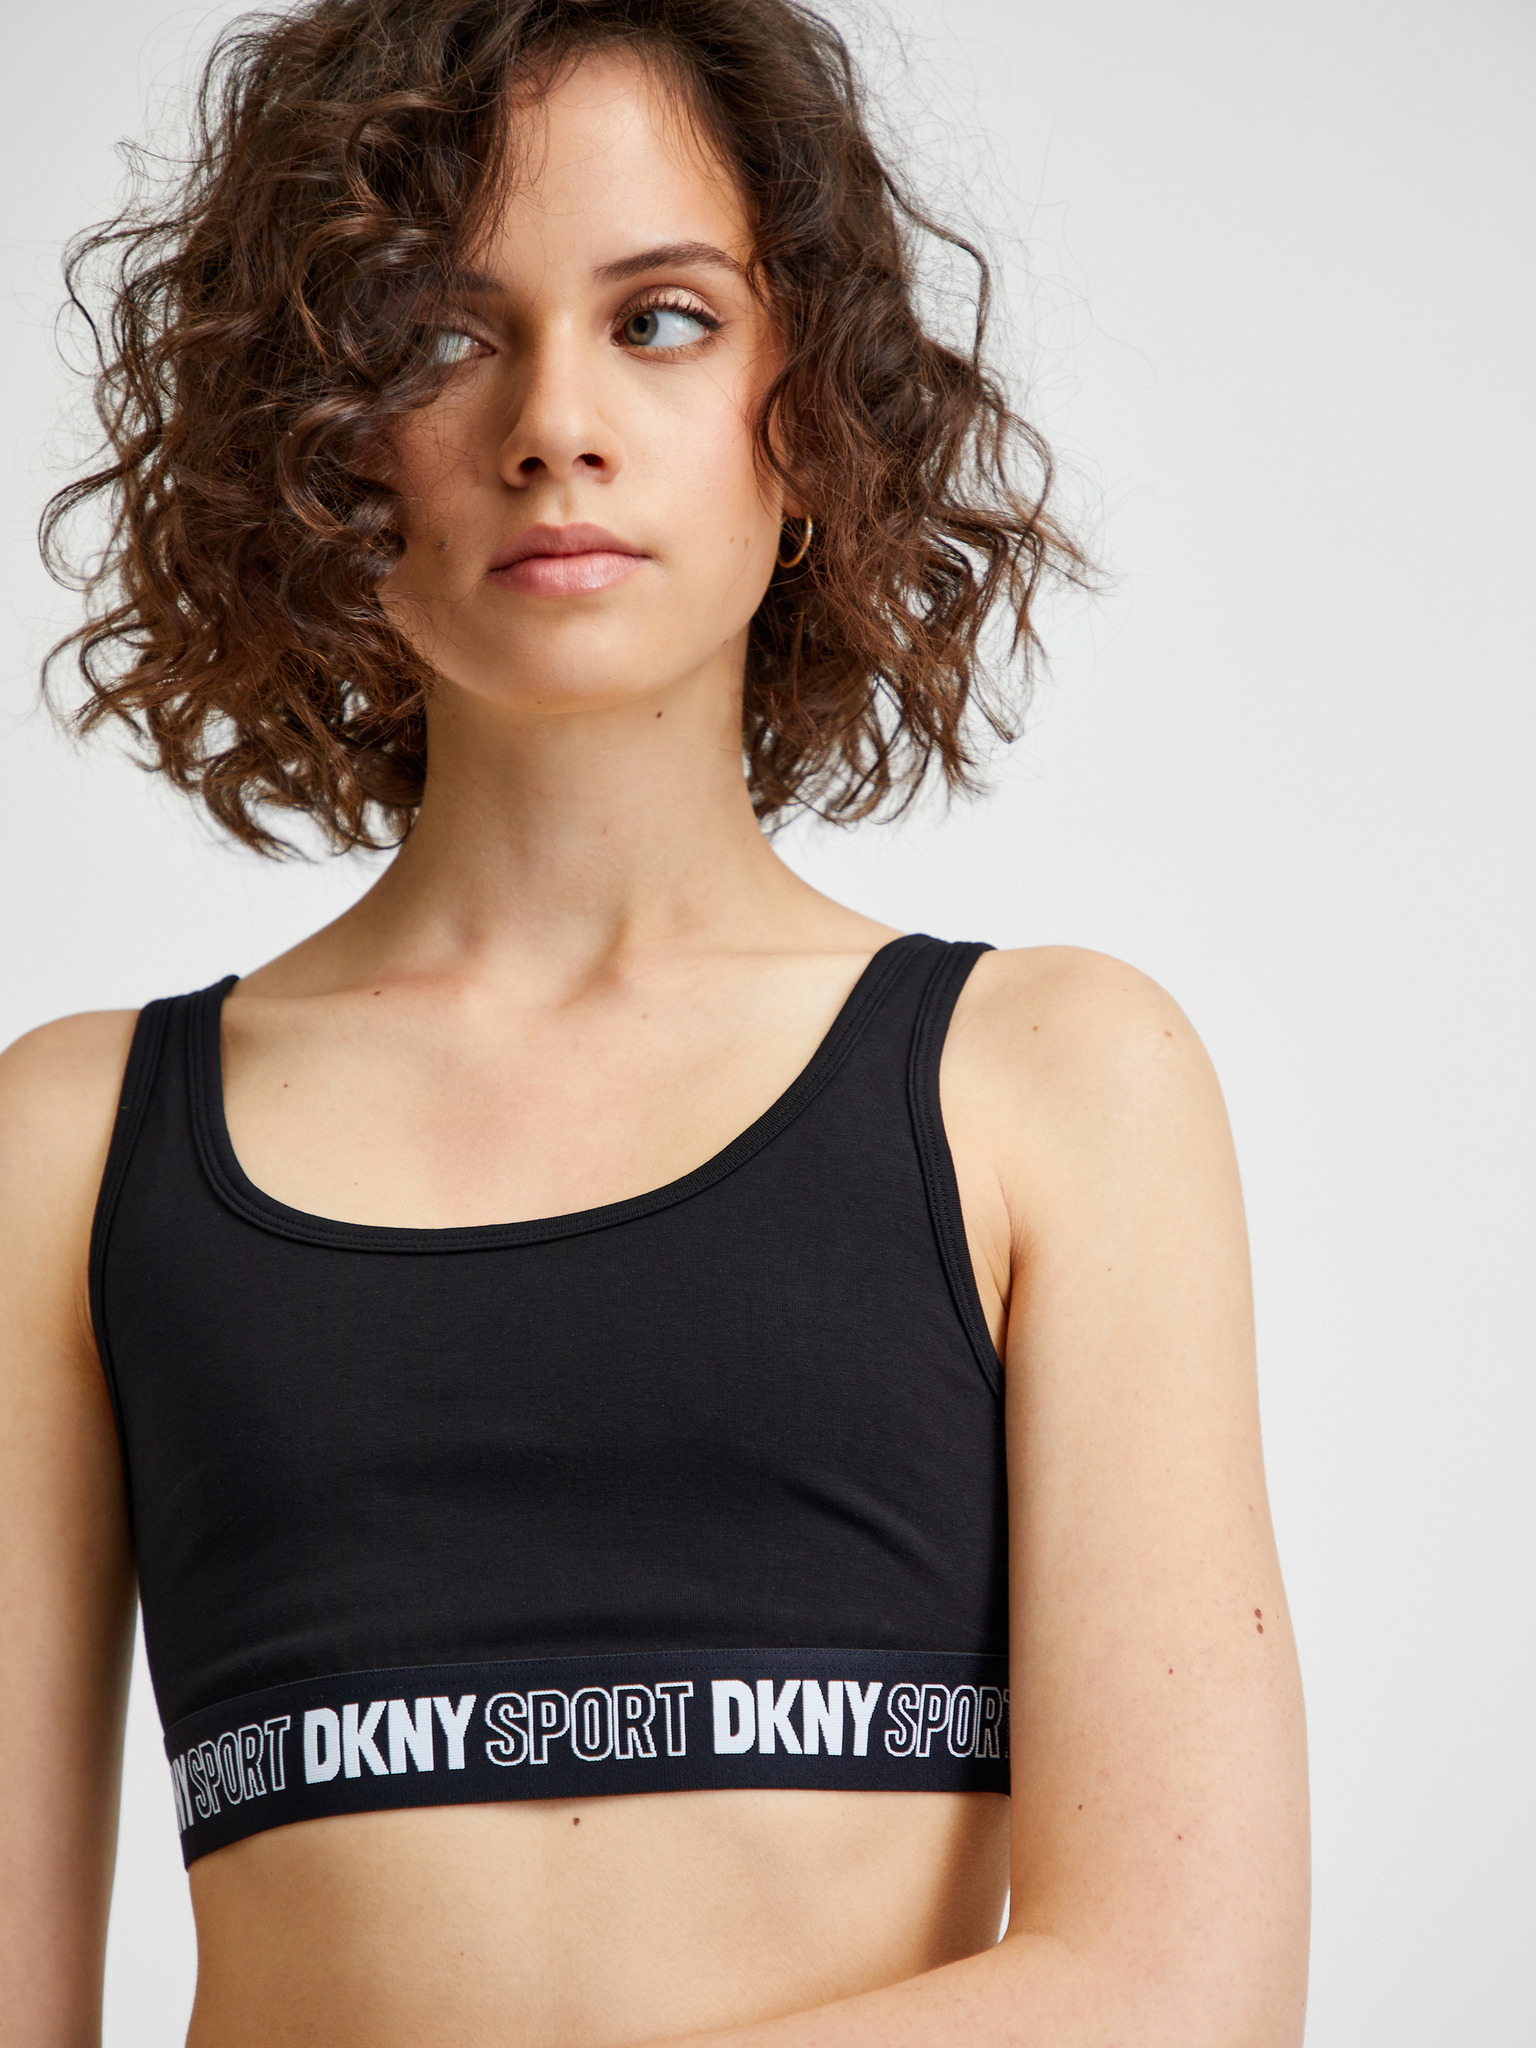 415721 DKNY SPORT sports bra in black/white - - Depop